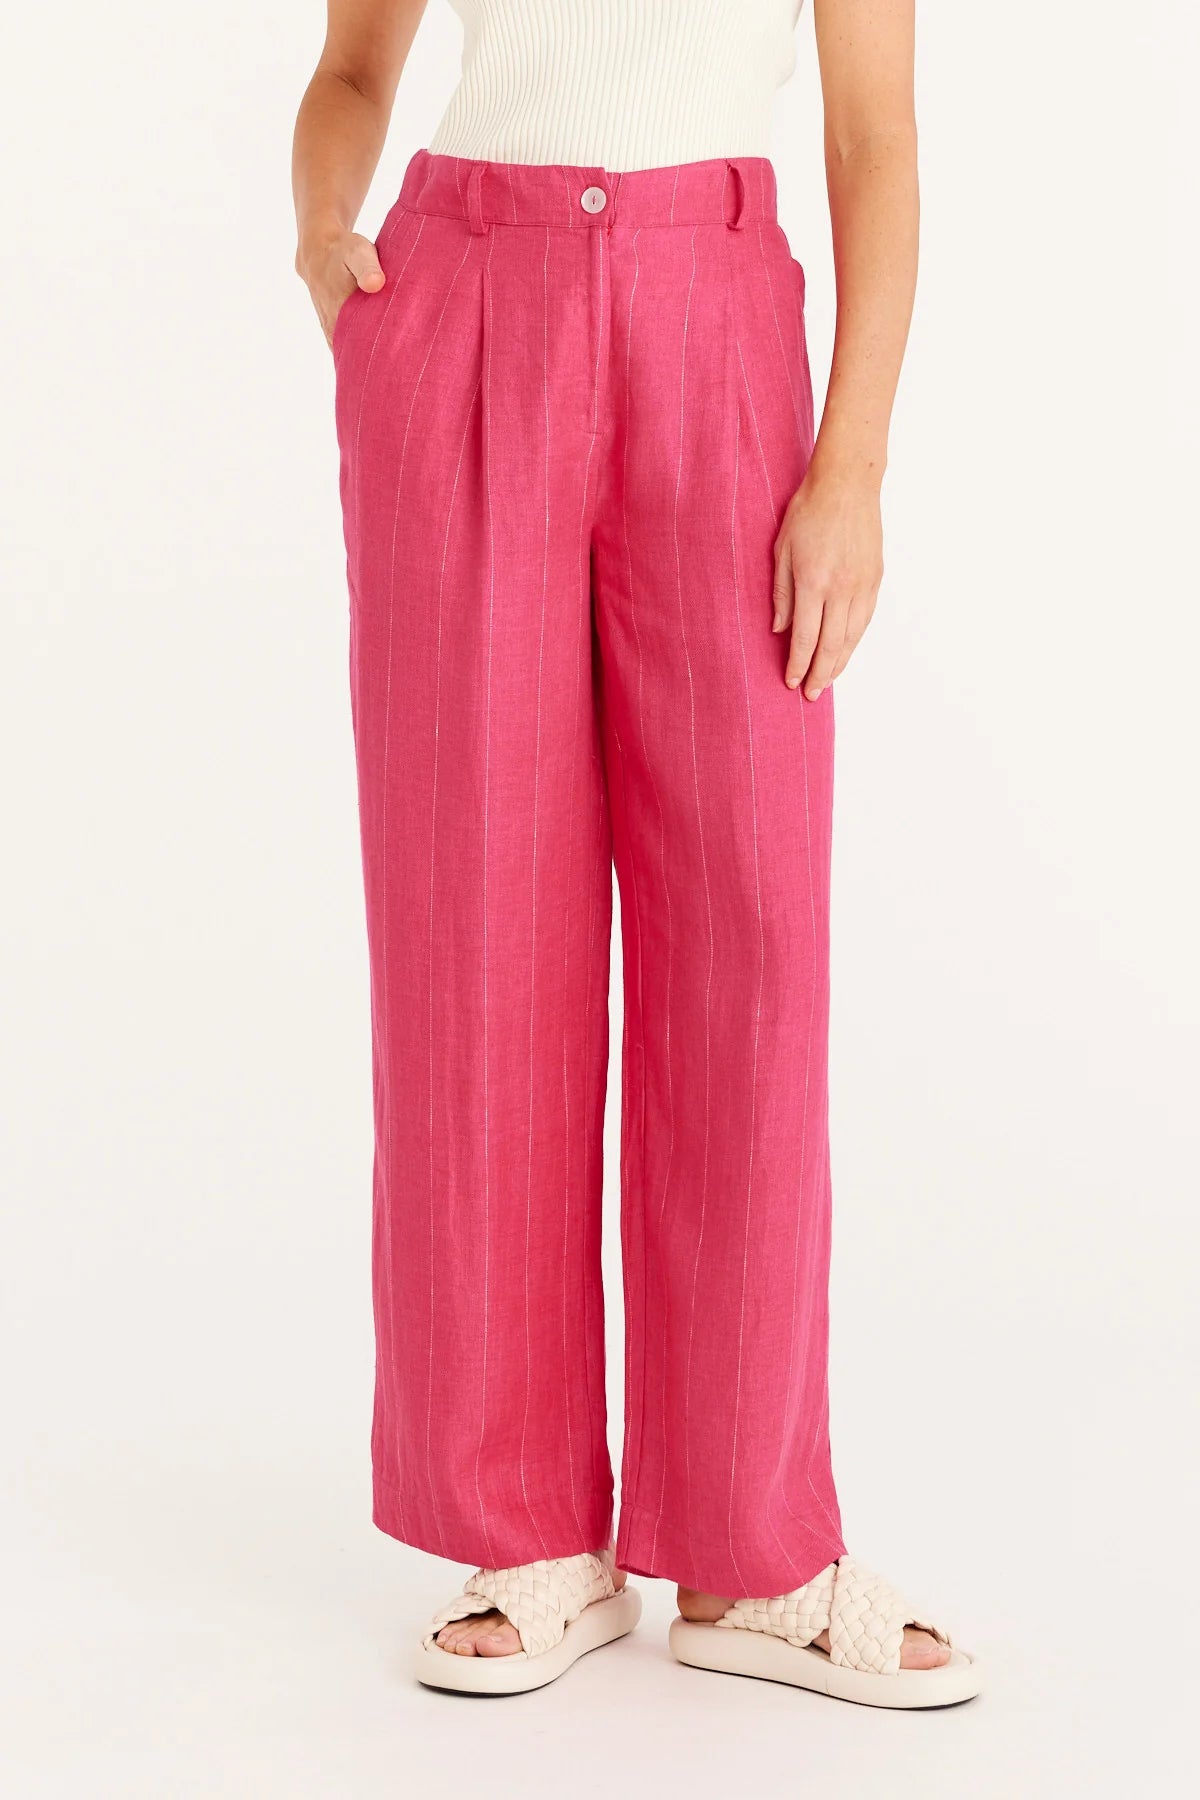 CABLE - Freya Linen Pant - Hot Pink